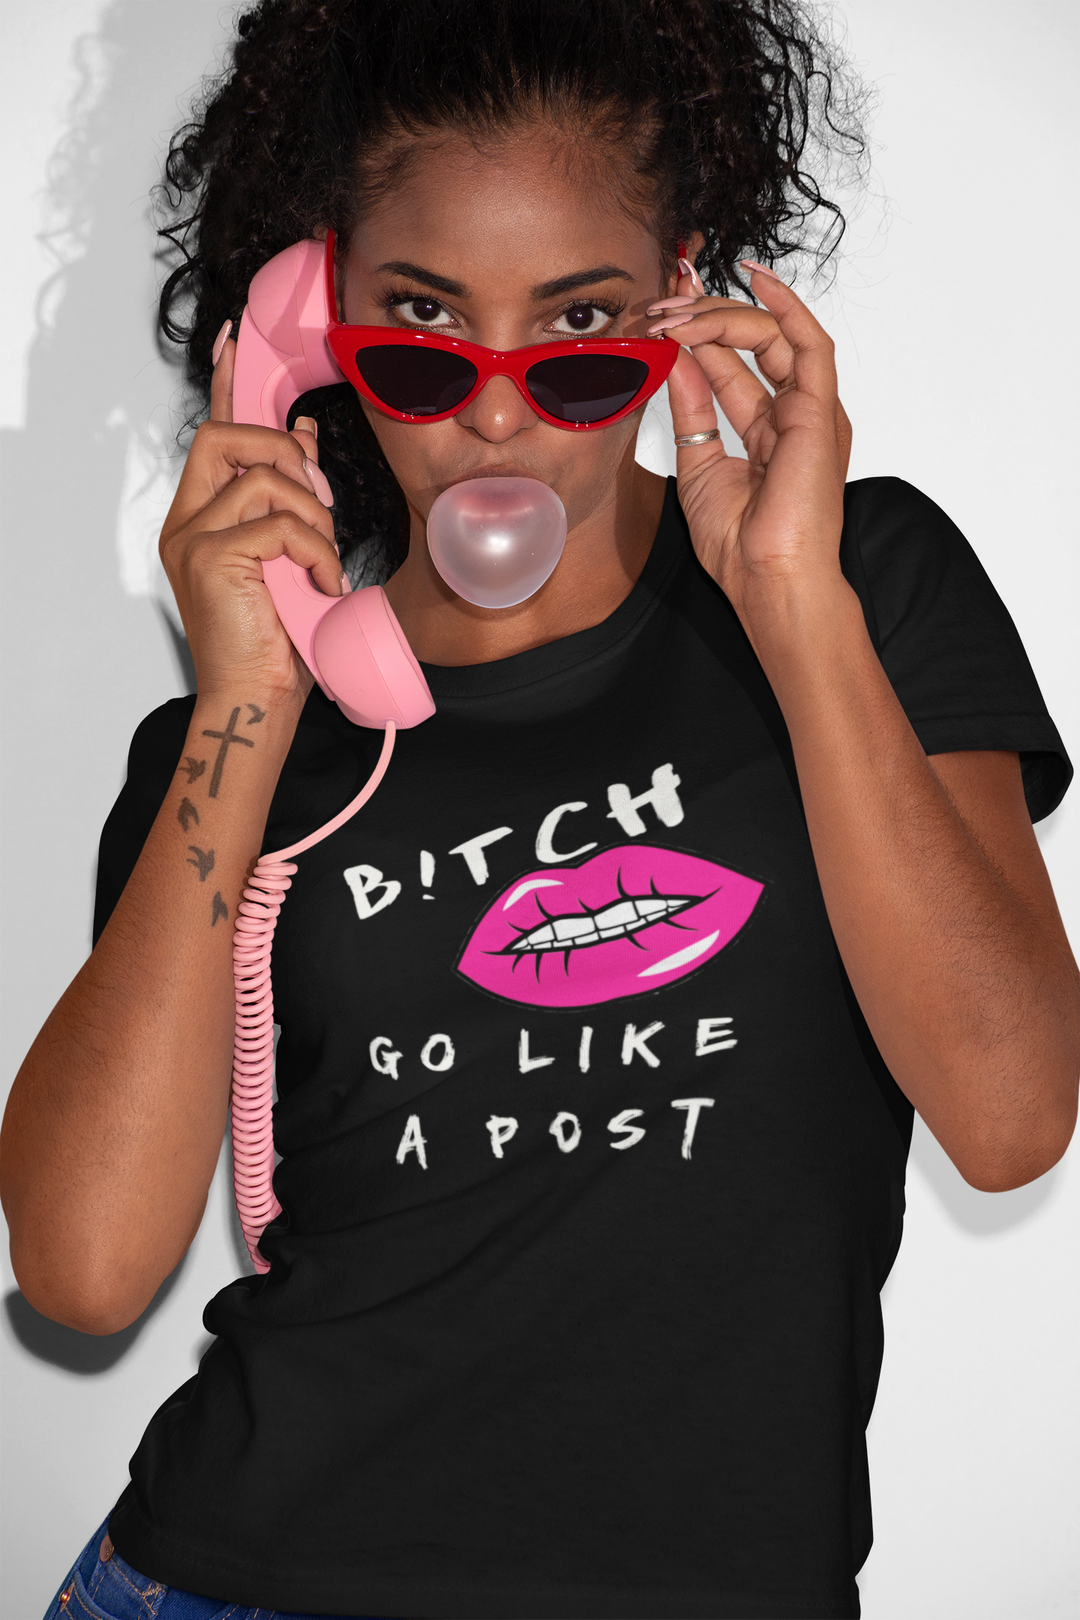 Cardi-B-Nicki-Minaj-Crewneck-sweater-new-bitch-wear-design-fashionova-post-instagram-sweatshirt-gossip-shirt-bitch